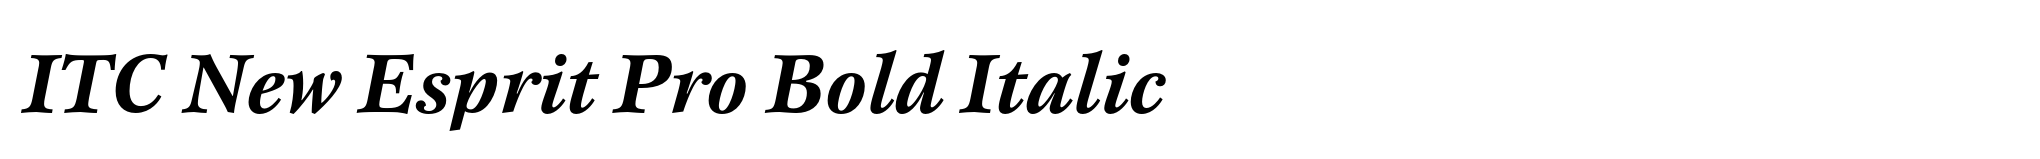 ITC New Esprit Pro Bold Italic image